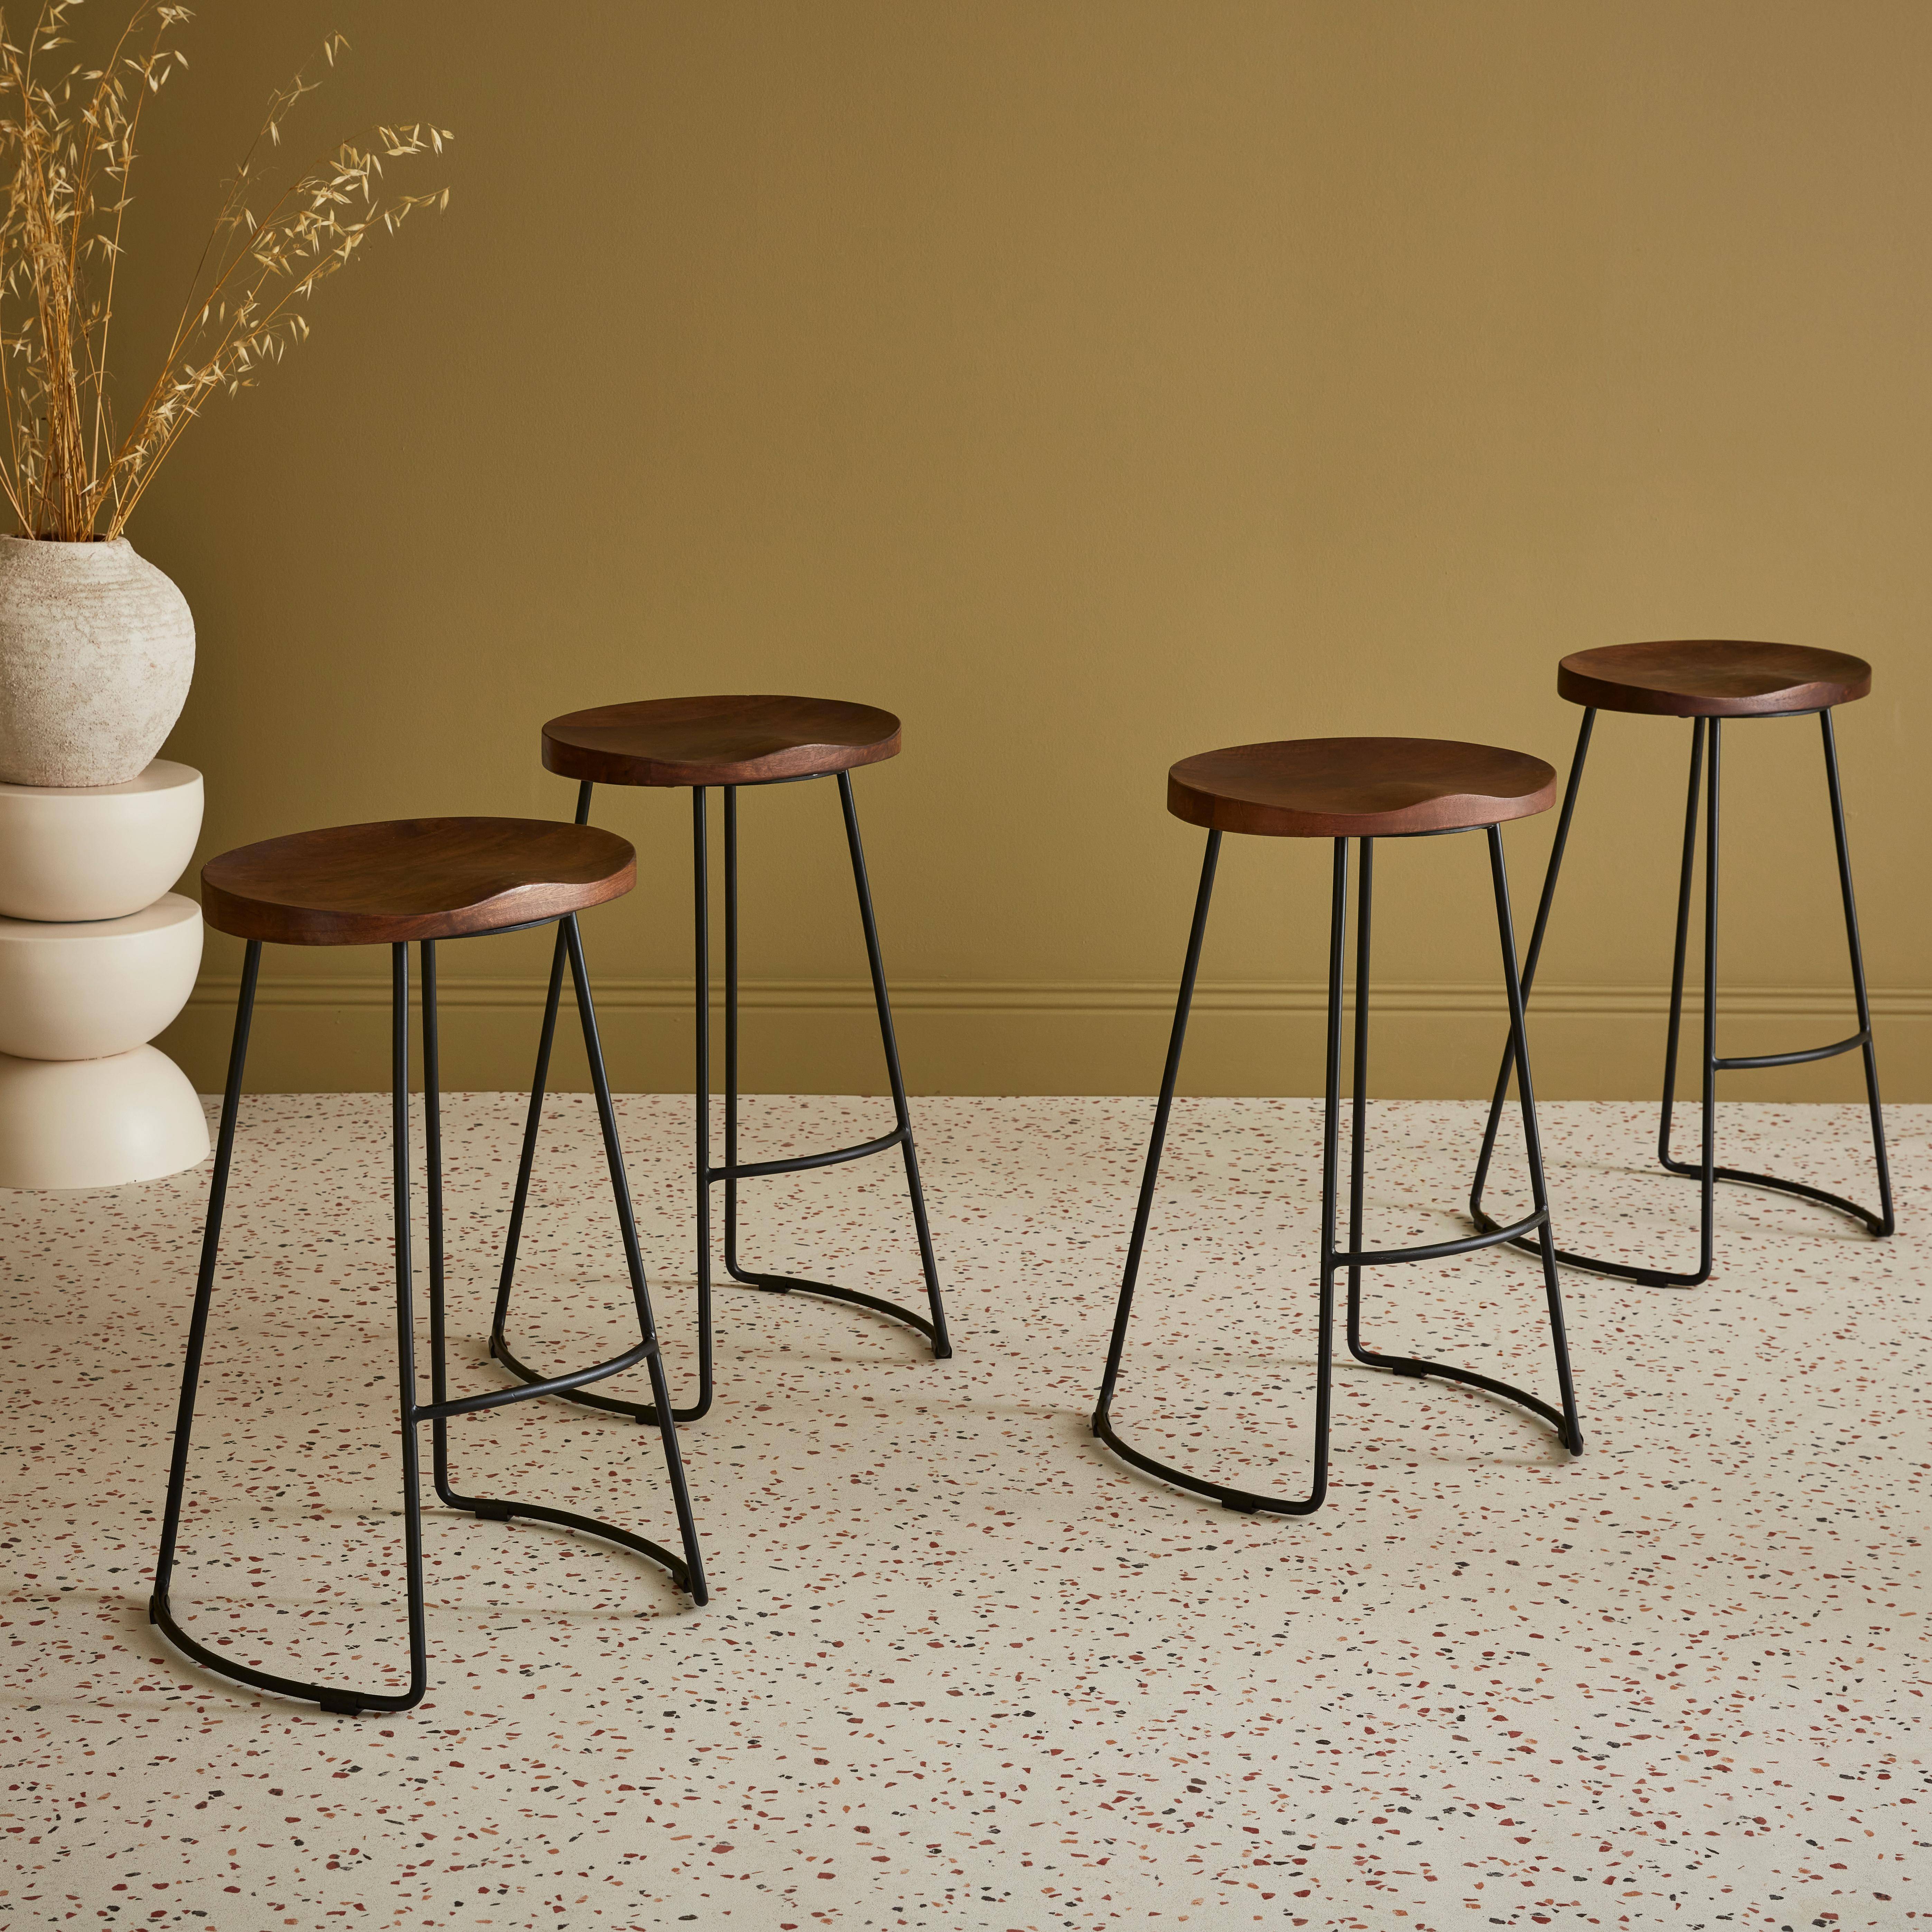 Set of 4 industrial metal and wooden bar stools, 44x36x65cm, Jaya, Light Walnut, Mango wood seat, black metal legs Photo2